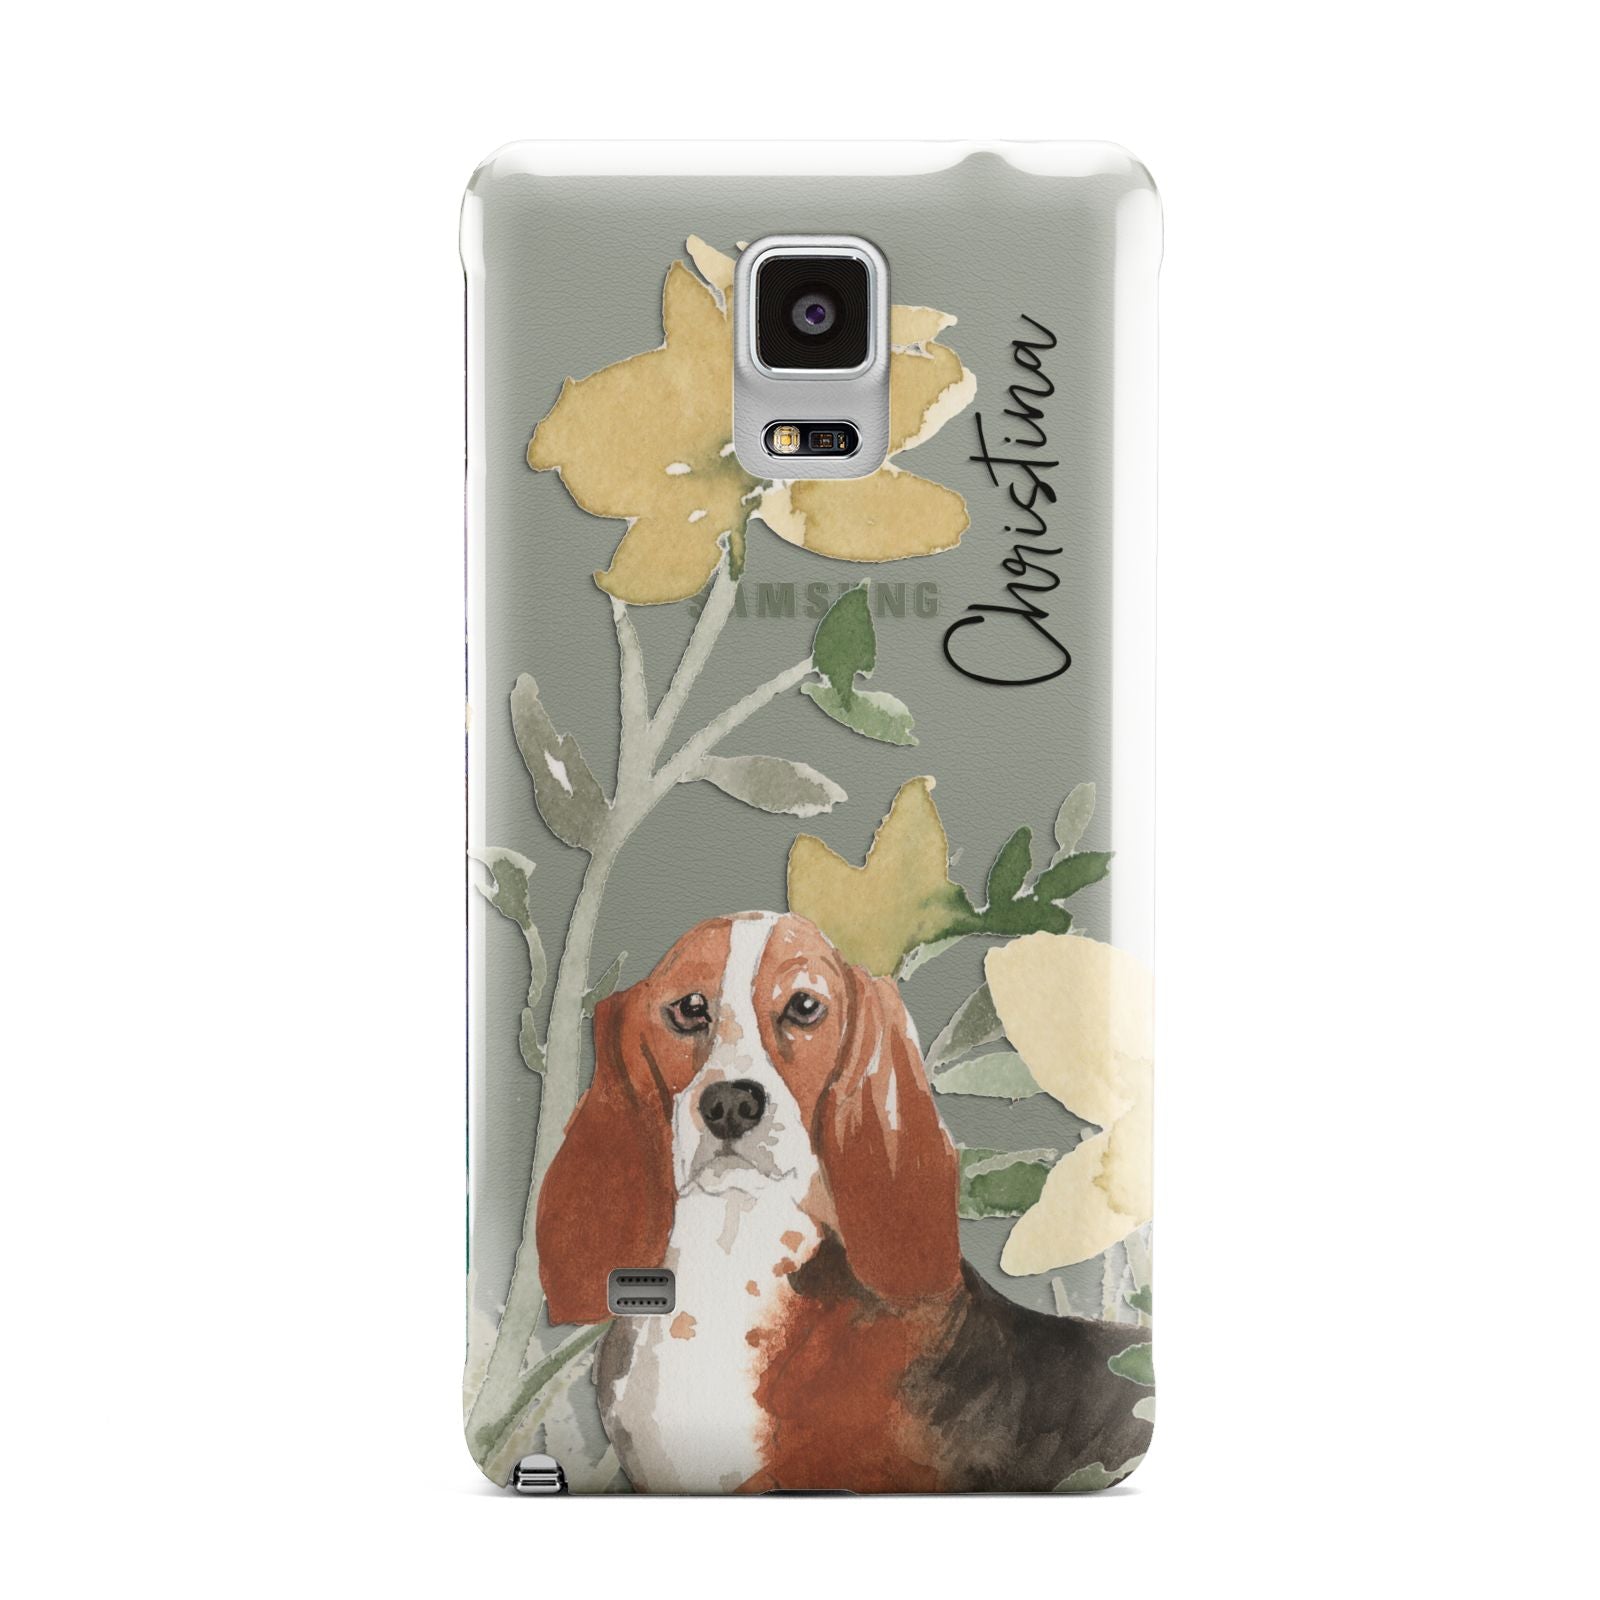 Personalised Basset Hound Dog Samsung Galaxy Note 4 Case